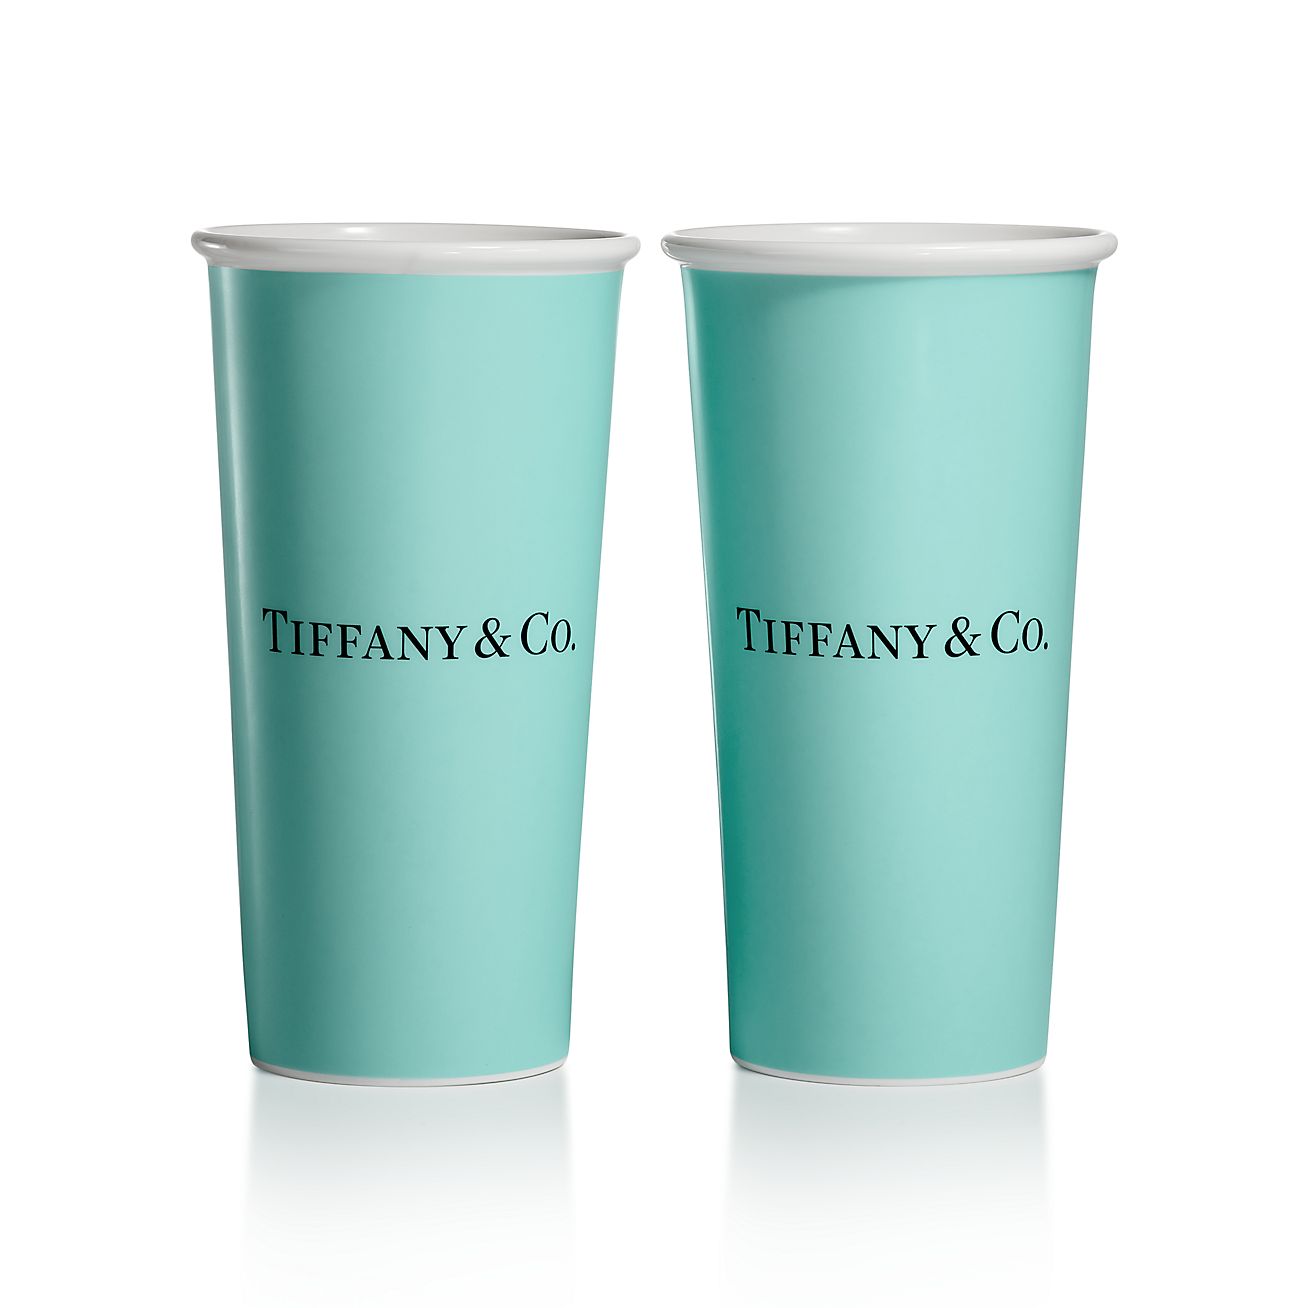 https://media.tiffany.com/is/image/Tiffany/EcomItemL2/everyday-objectstiffany-large-coffee-cups-73506875_1058223_ED.jpg